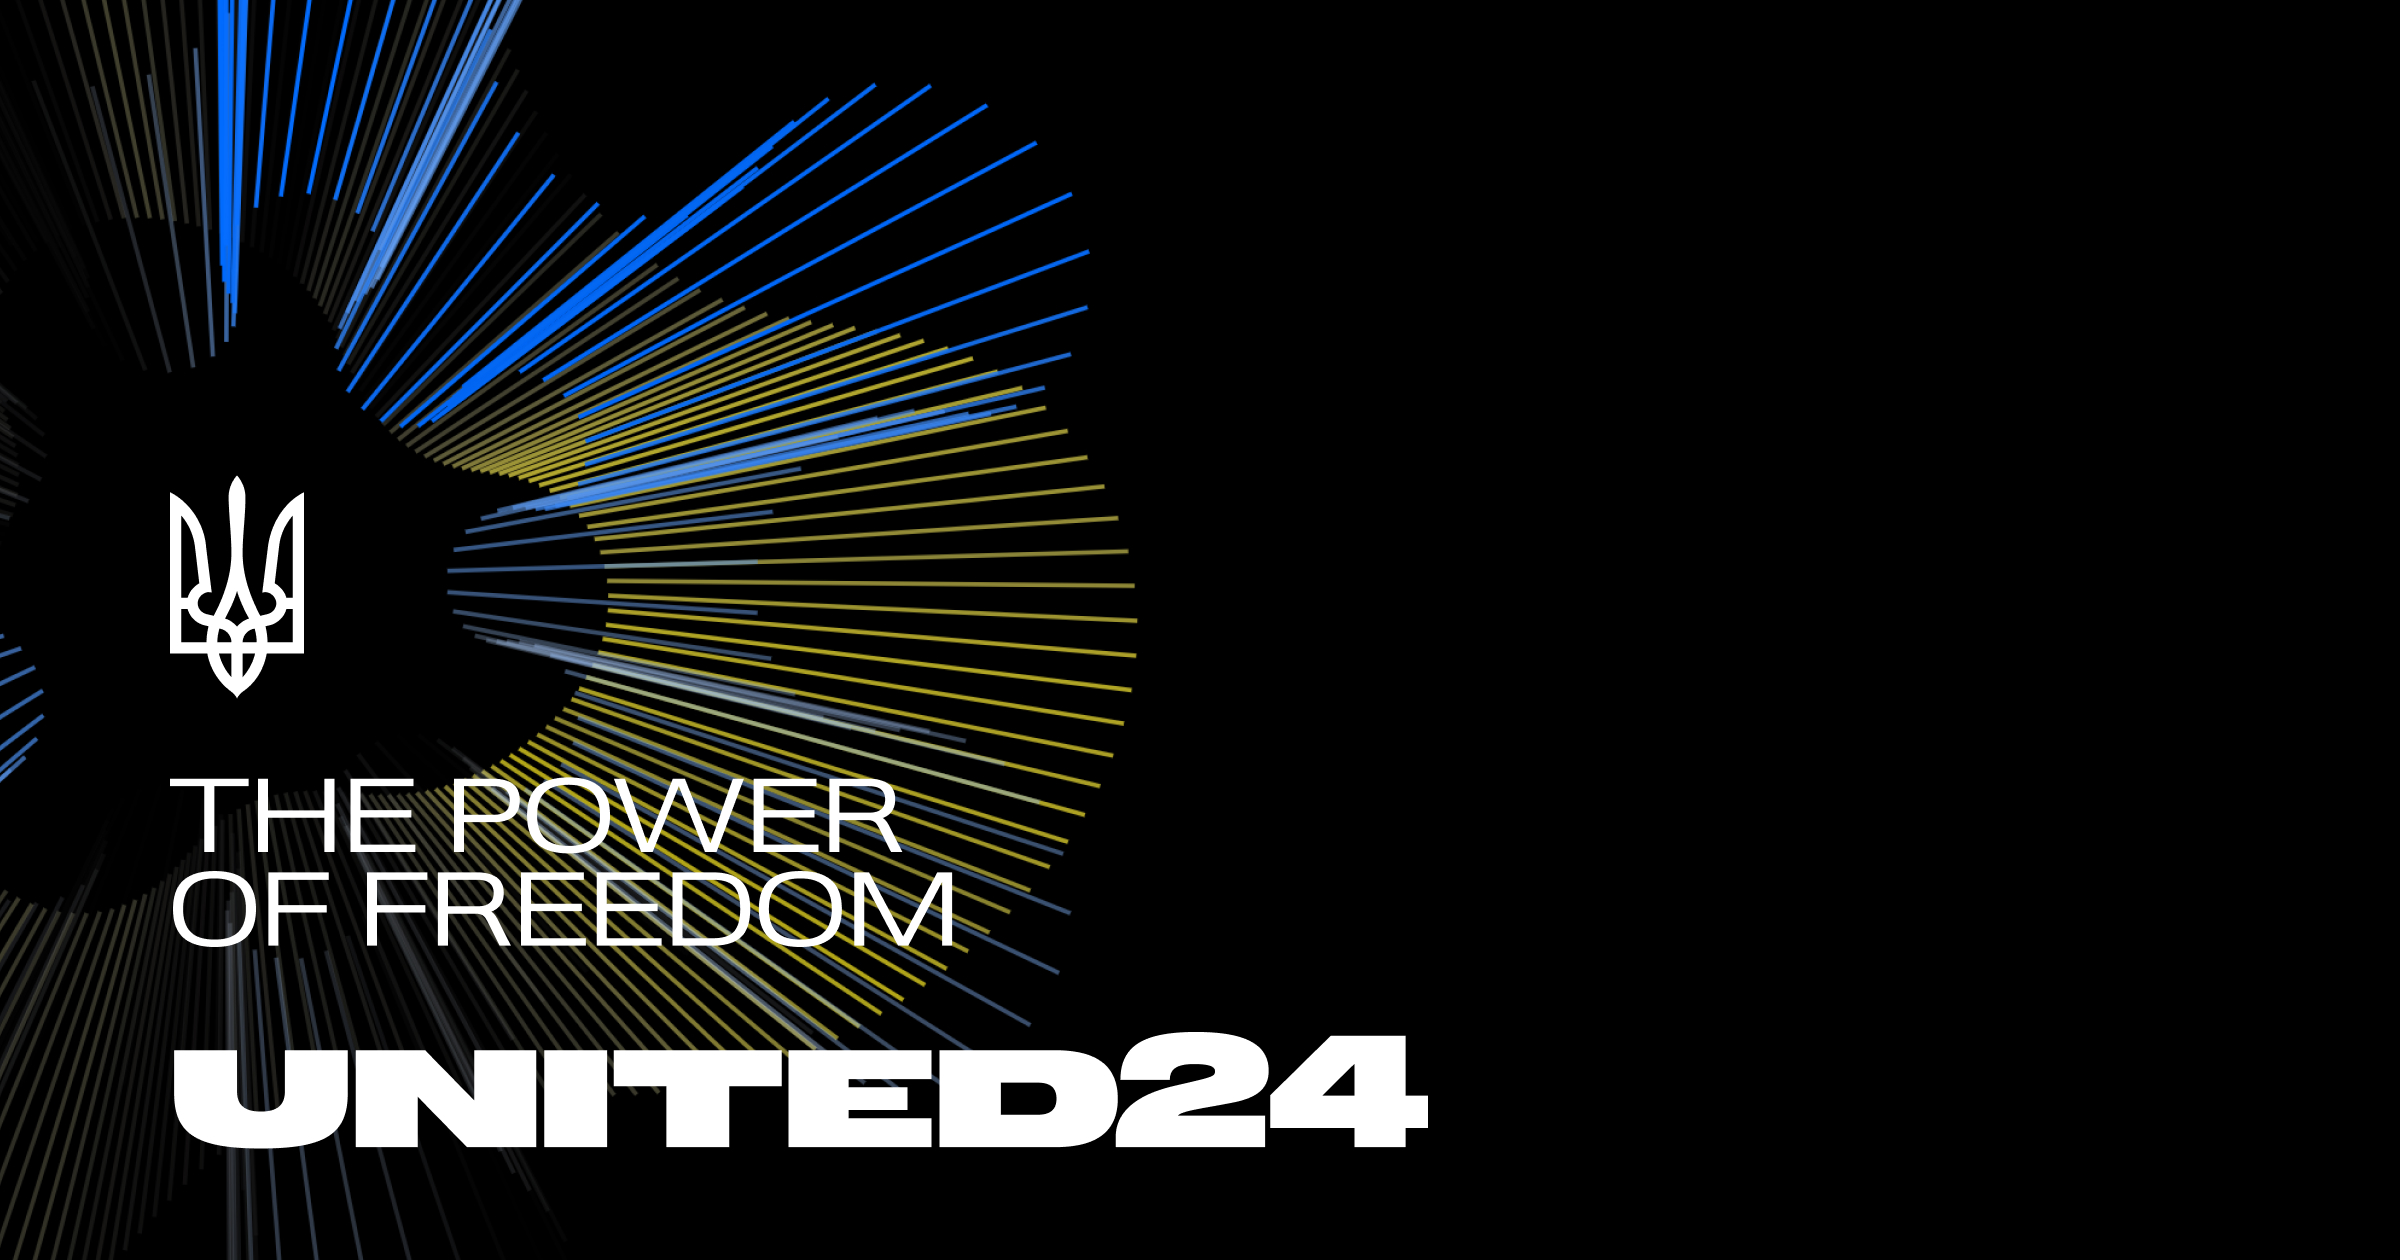 UNITED24, the organization that Dendi's charity match benefits  